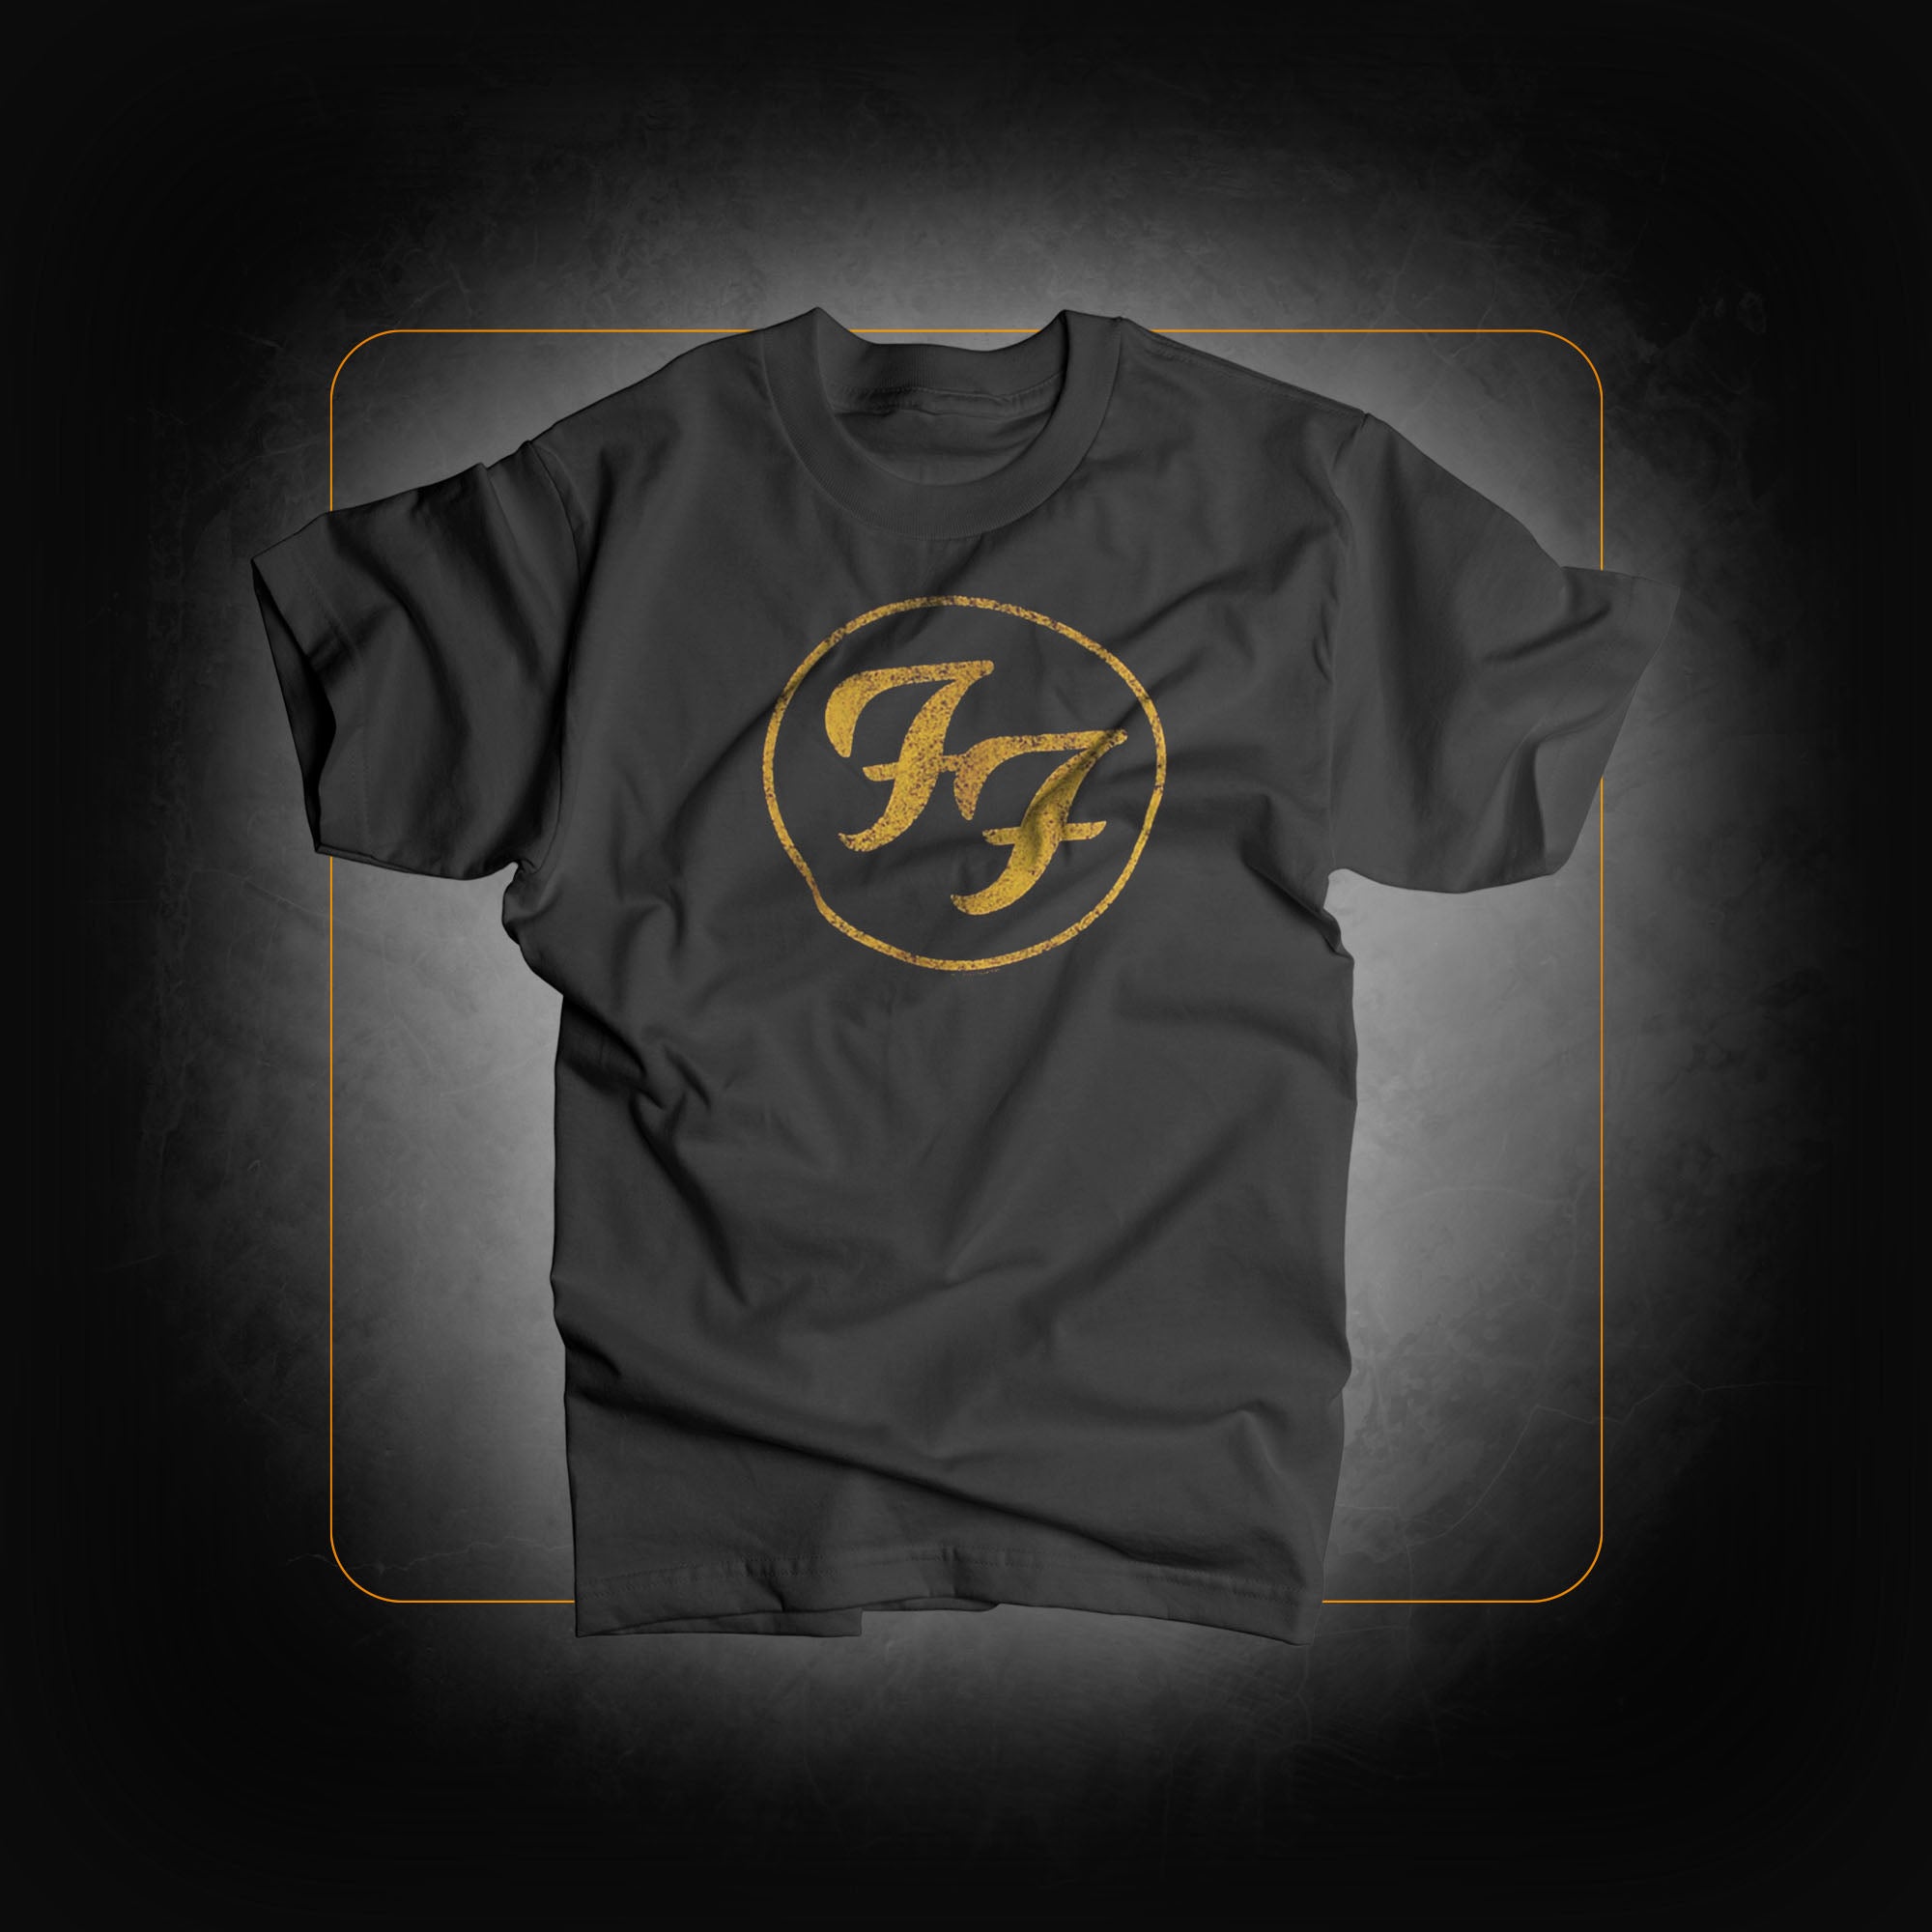 T-shirt Foo Fighters